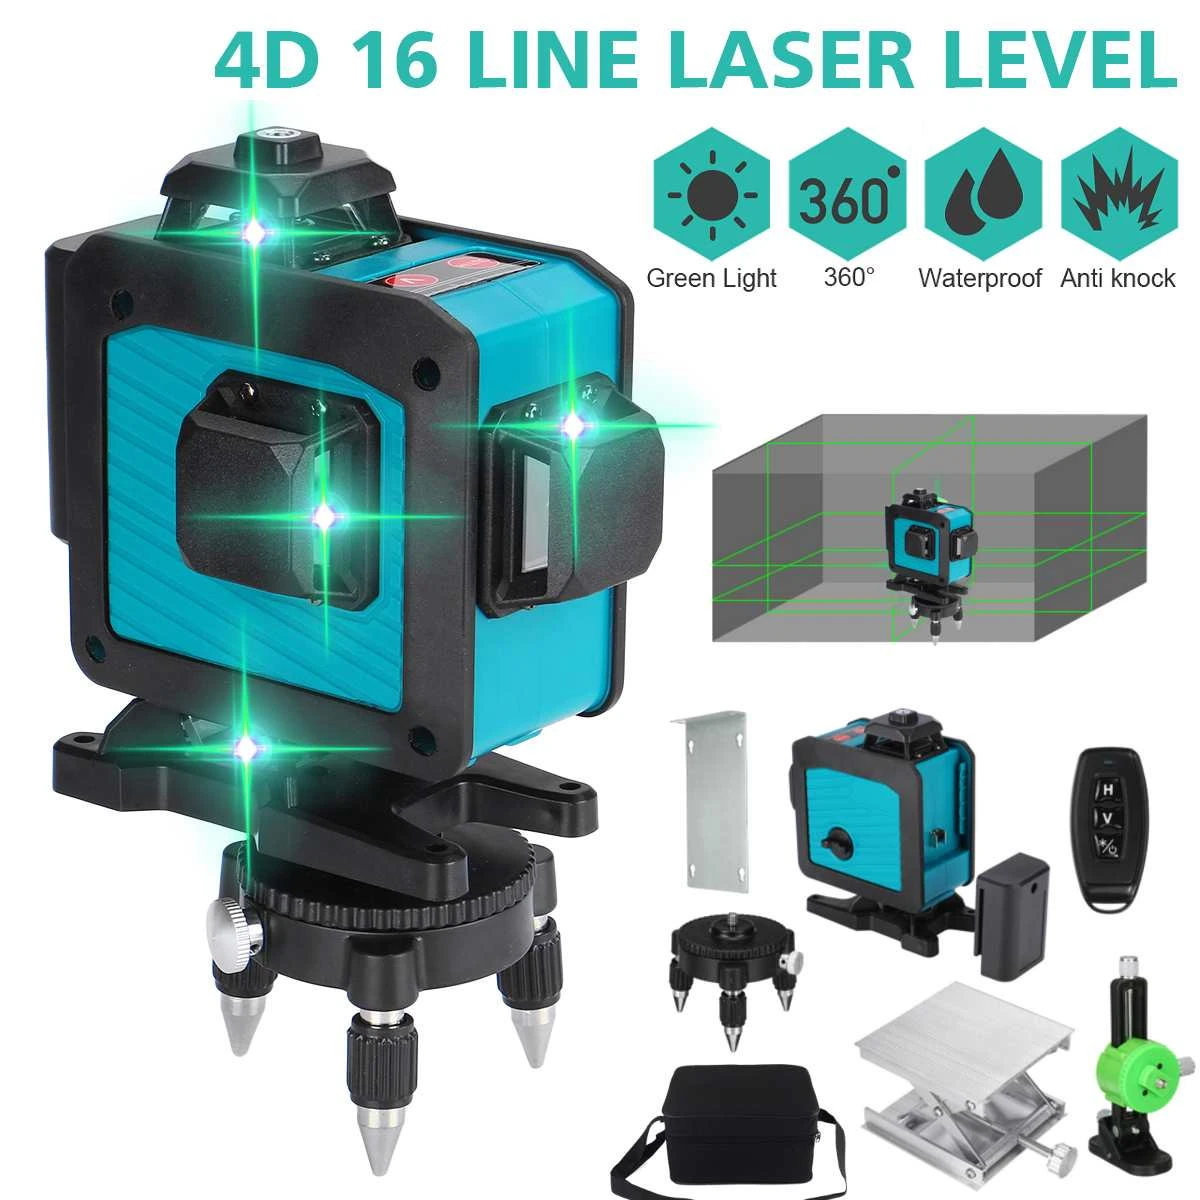 16 Line Laser Levels 360 Horizontal Vertical Cross 4D Green Light Laser Level Self-Leveling Measure Super Powerful Laser Beam